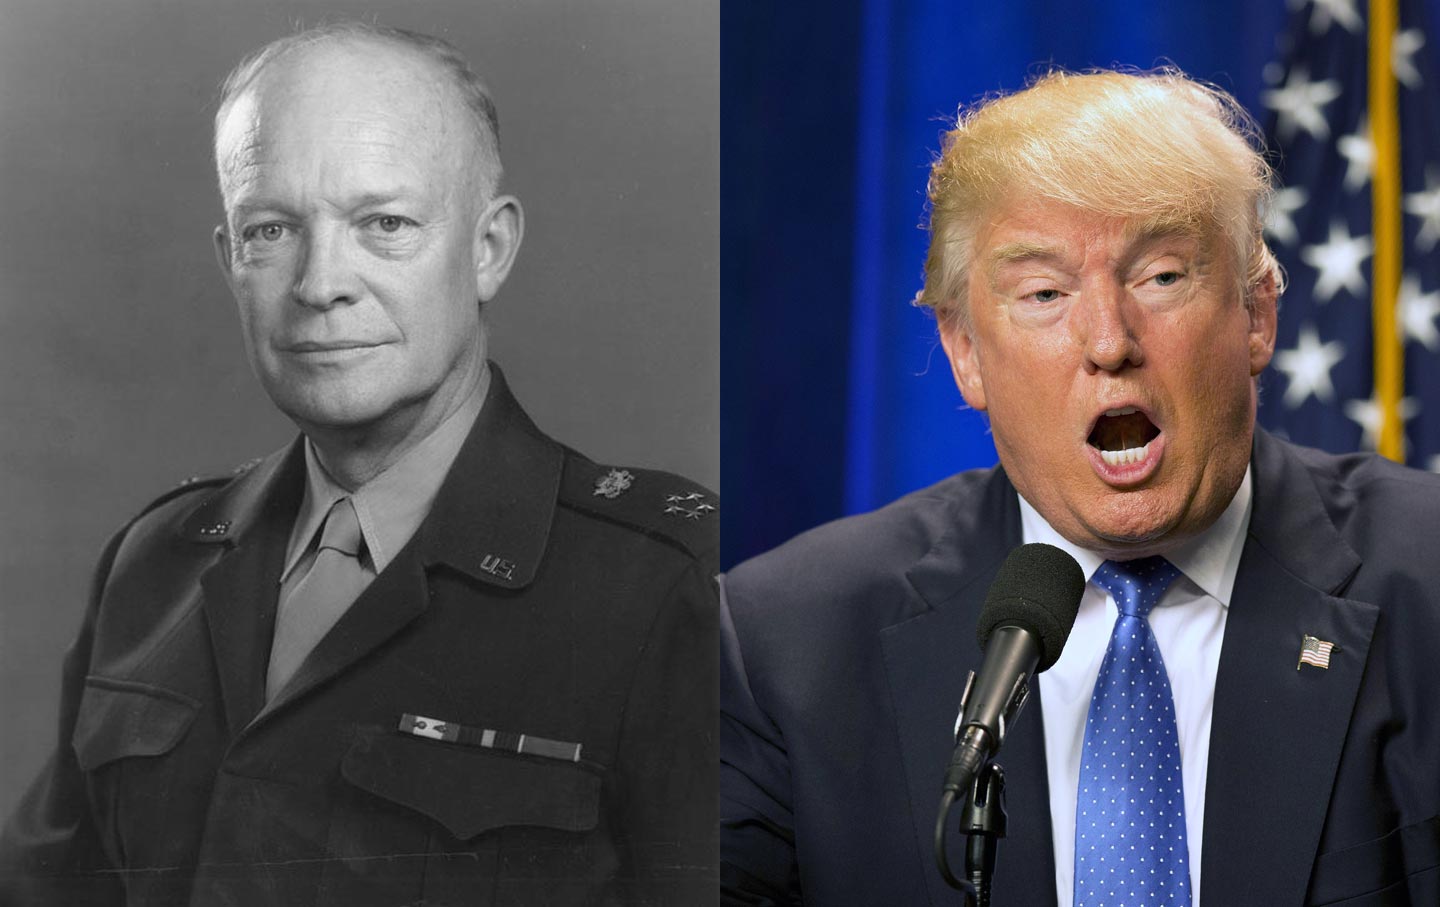 Dwight D. Eisenhower and Donald Trump